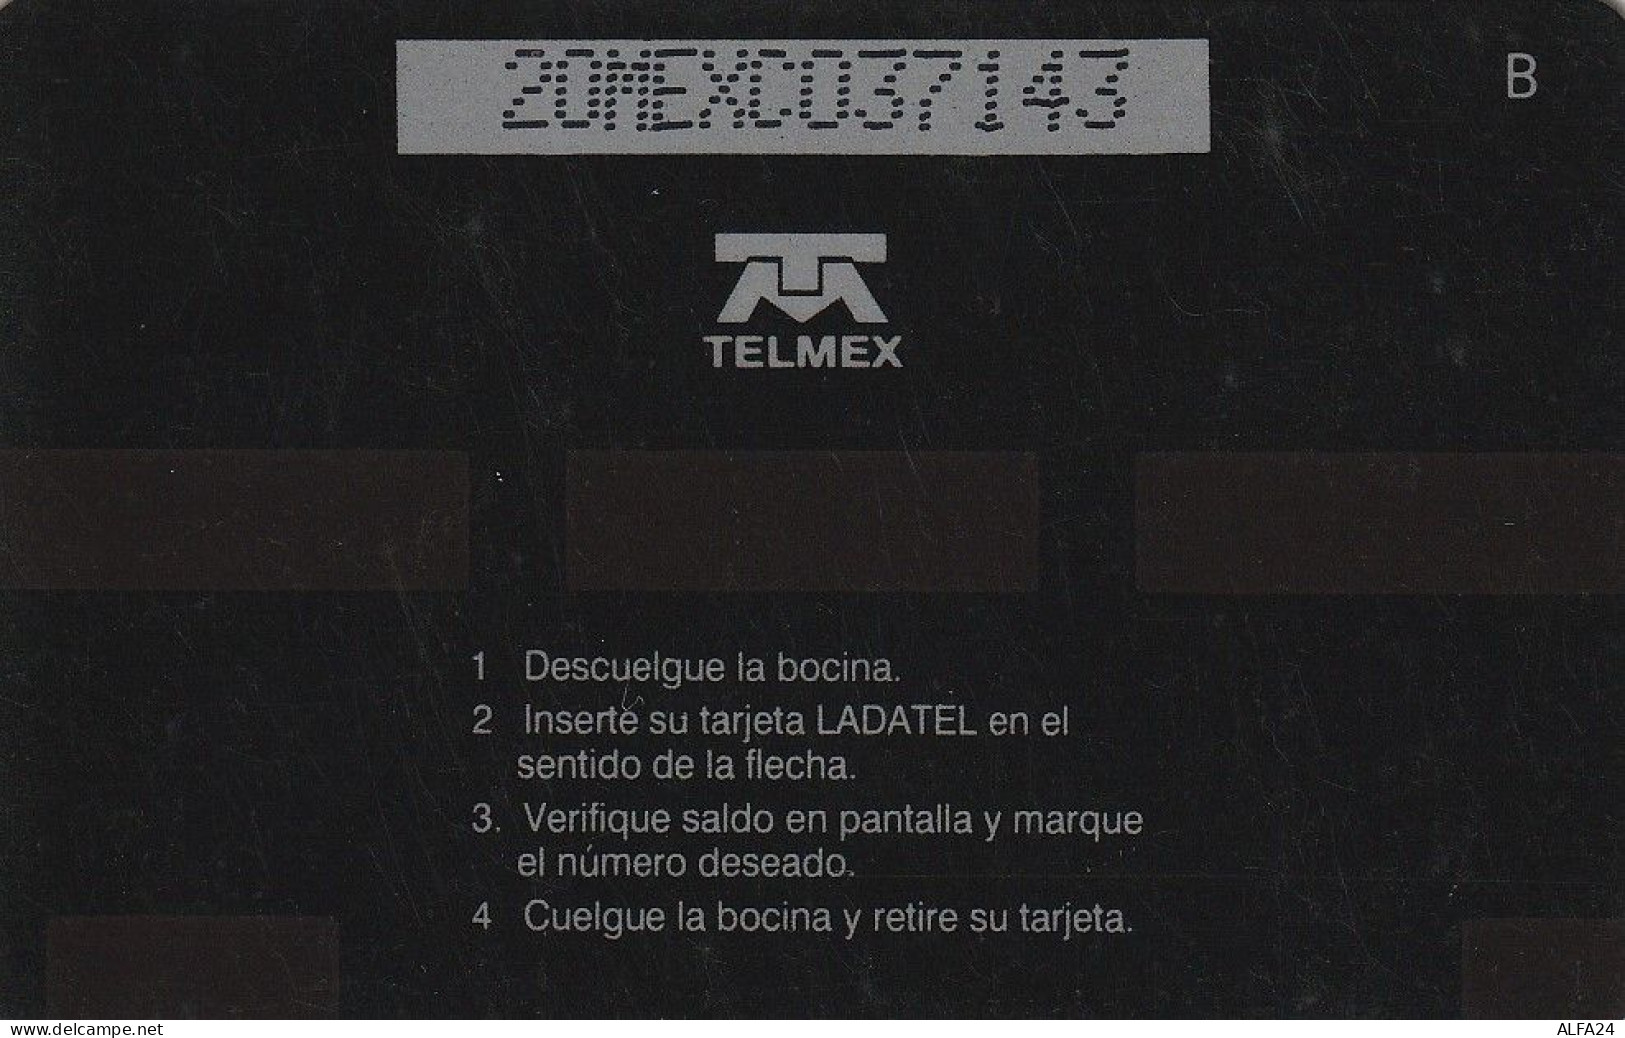 PHONE CARD MESSICO GPT (E67.27.2 - México